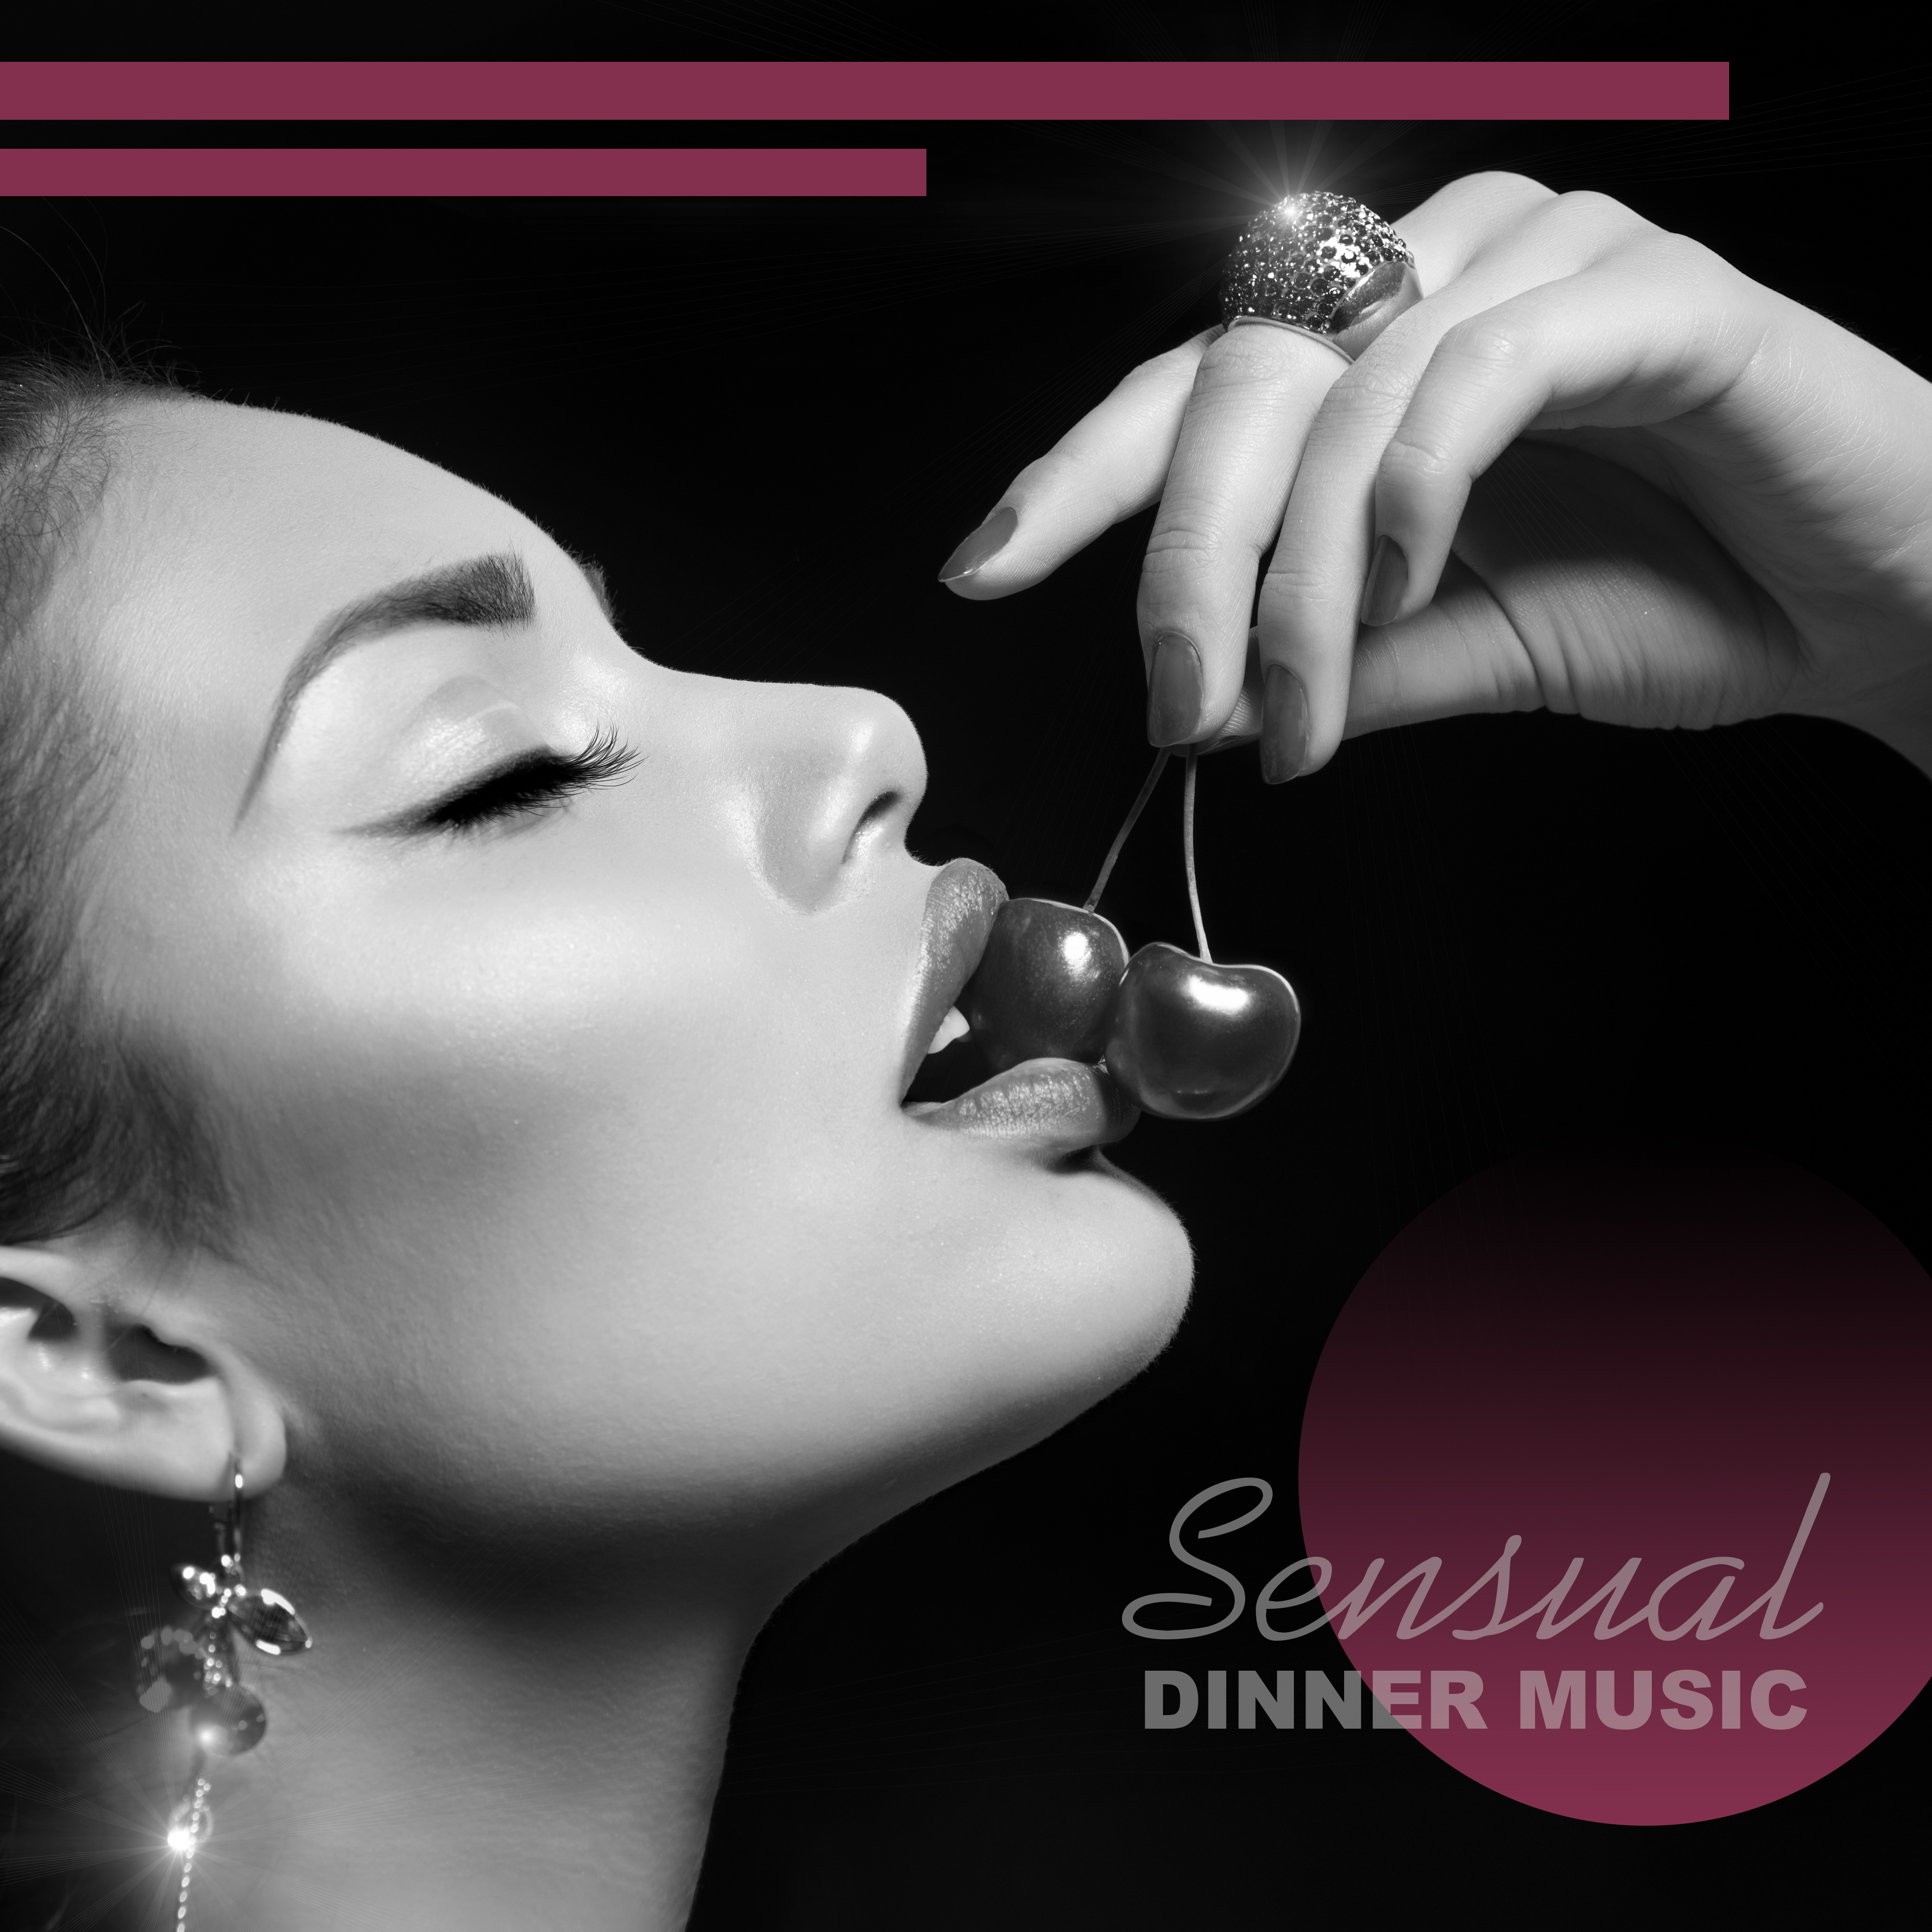 Sensual Dinner Music